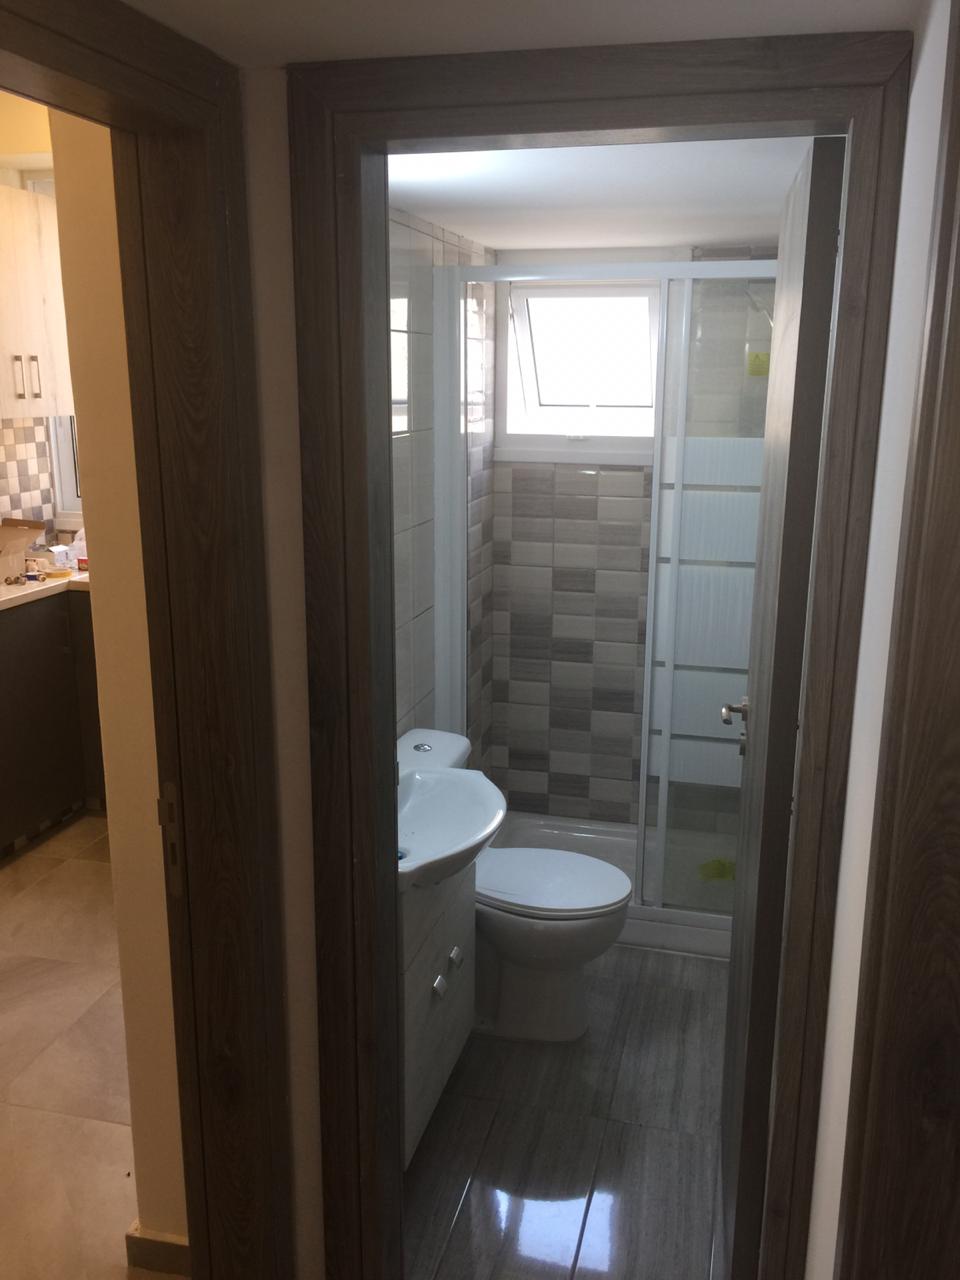 Ванная комната в апартаментах в Ларнаке